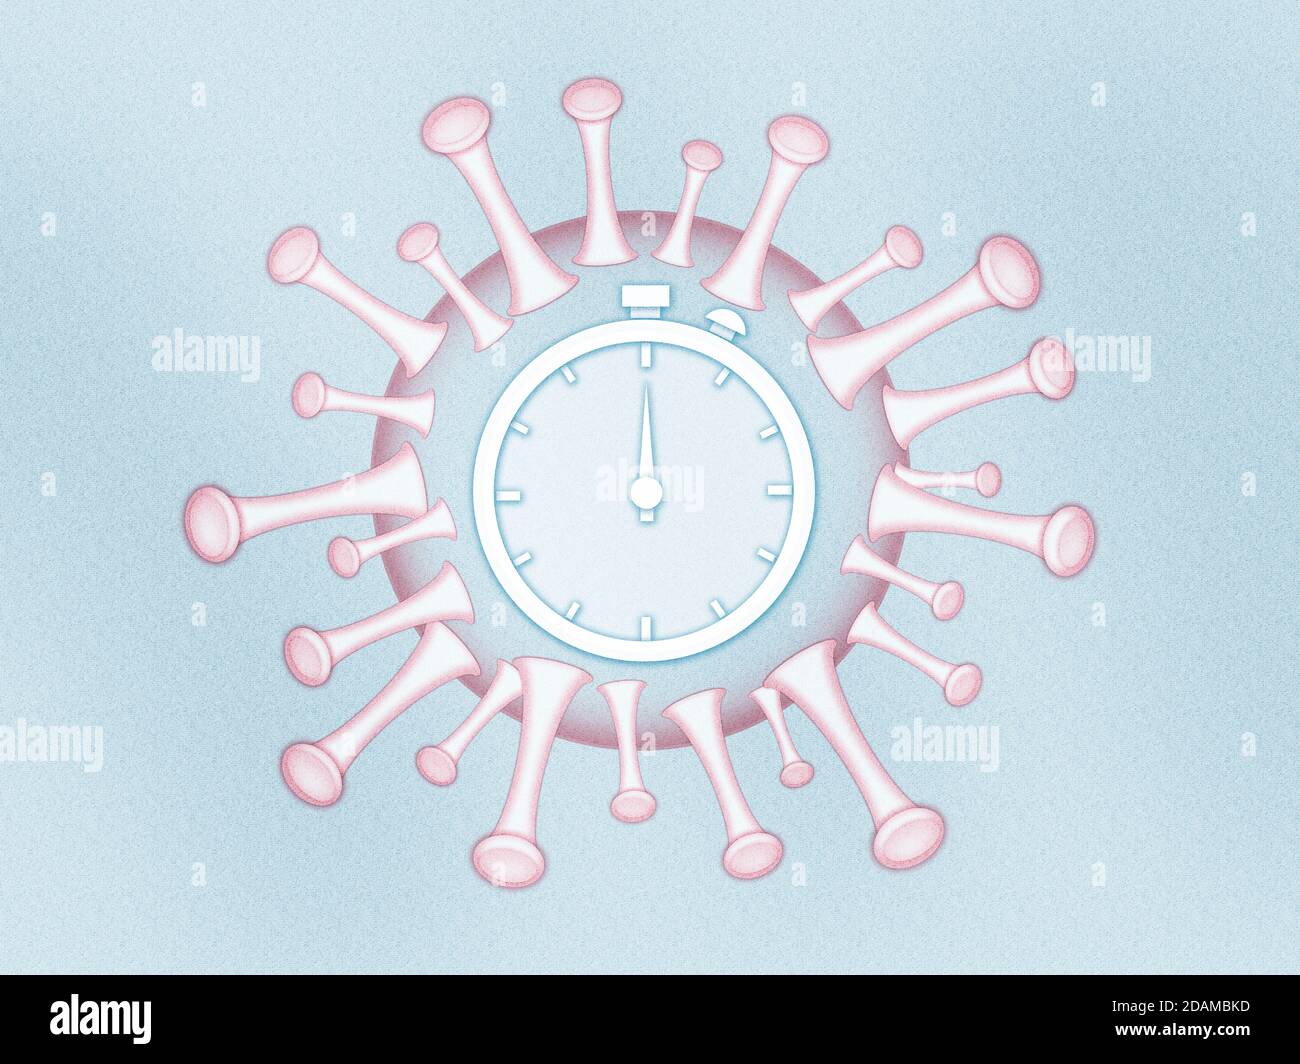 Covid-19 virus with stopwatch, illustration. Stock Photo